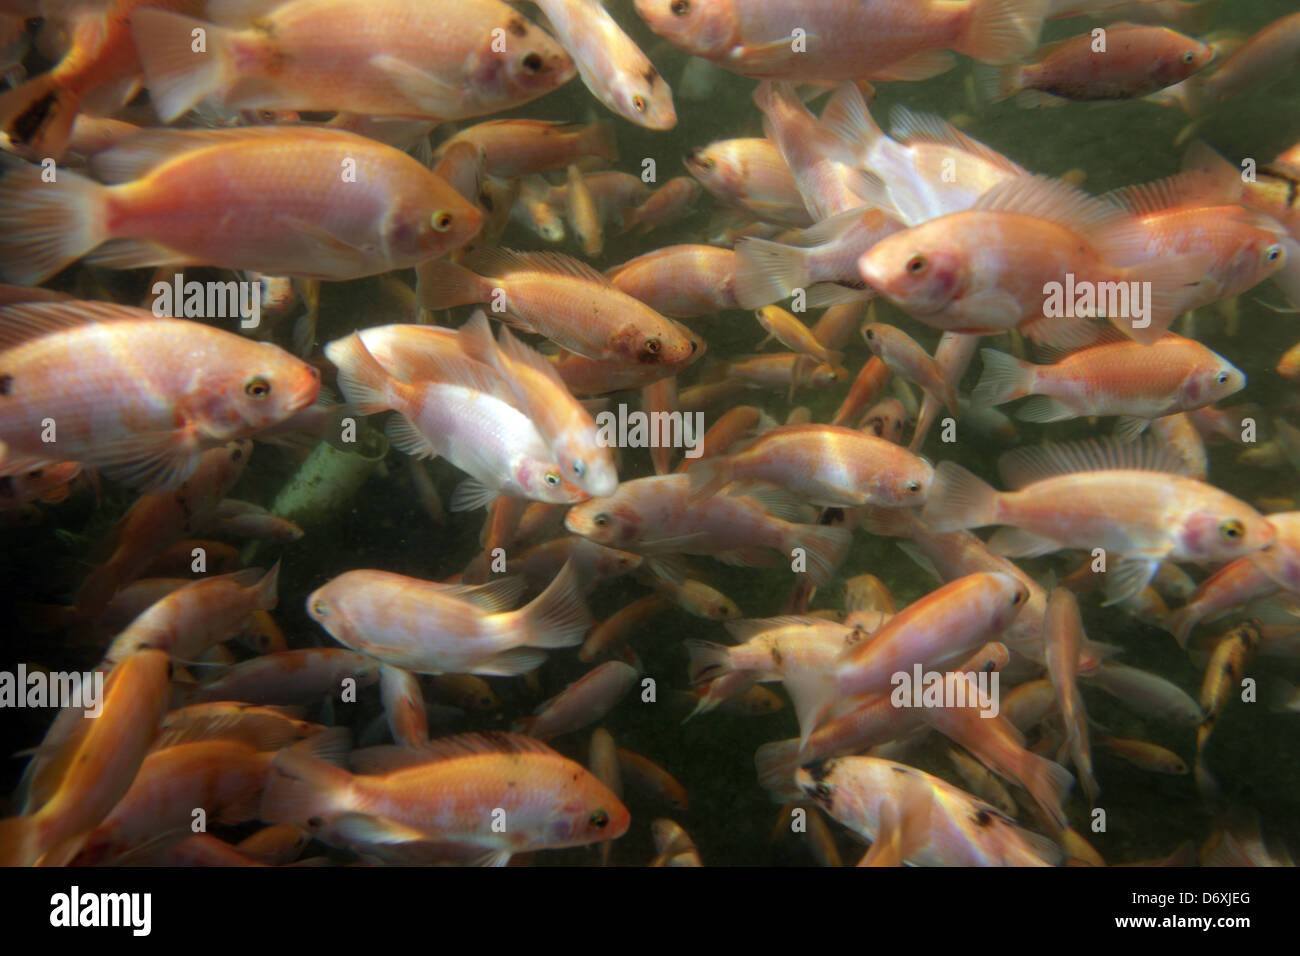 Tilapia fish farm fotografías e imágenes de alta resolución - Alamy